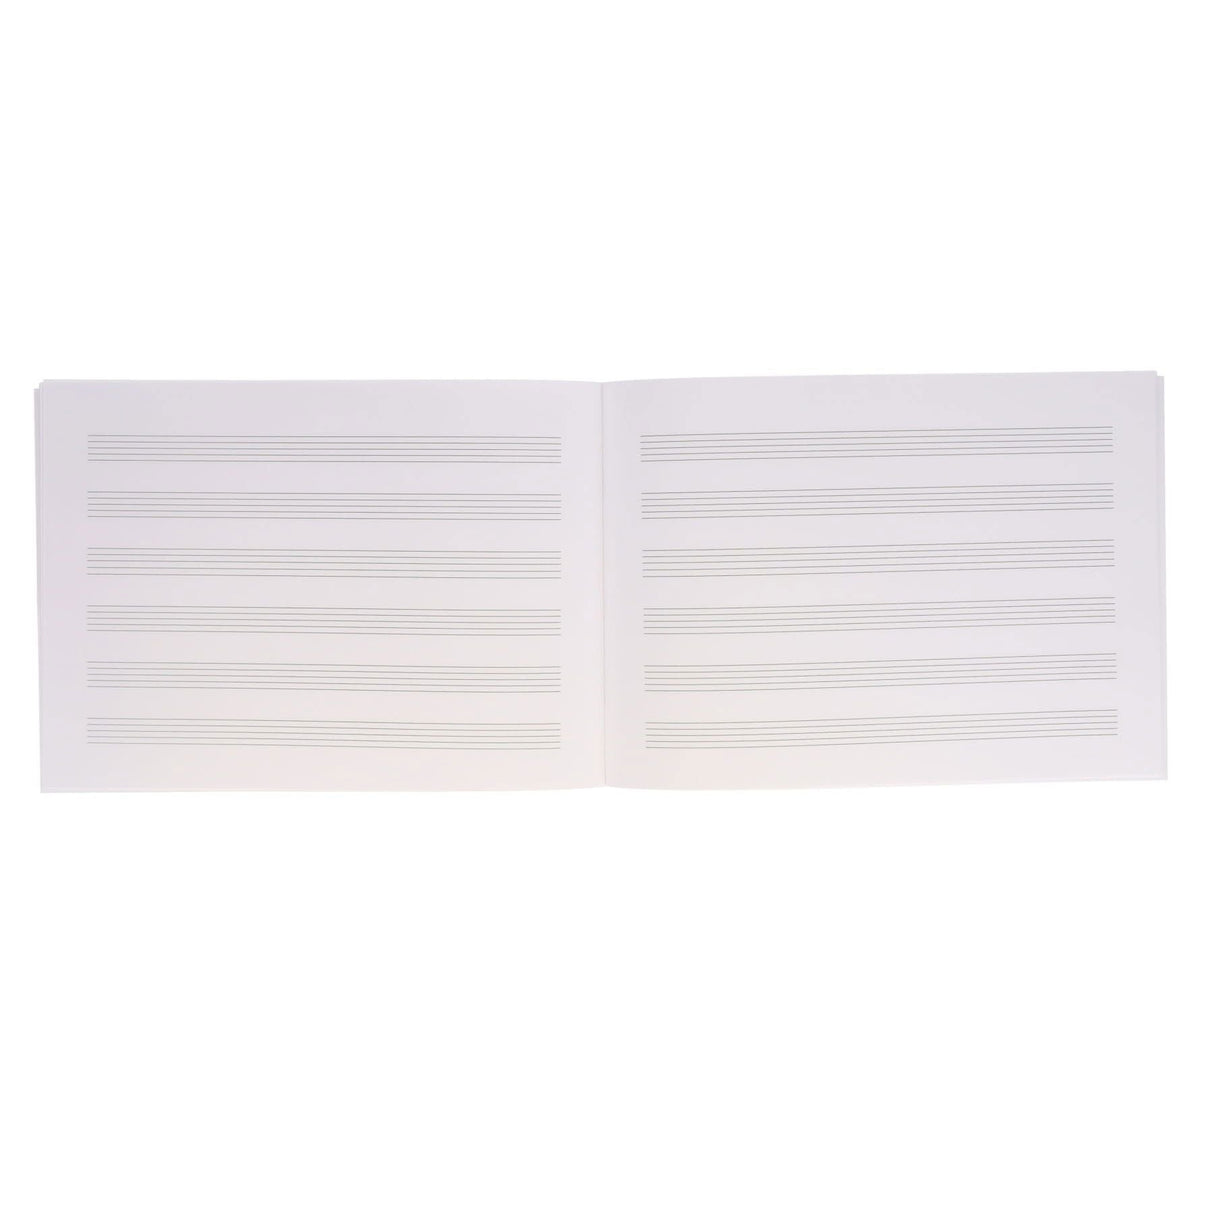 Premier 6 Stave Music Manuscript Book - 24 Pages | Stationery Shop UK